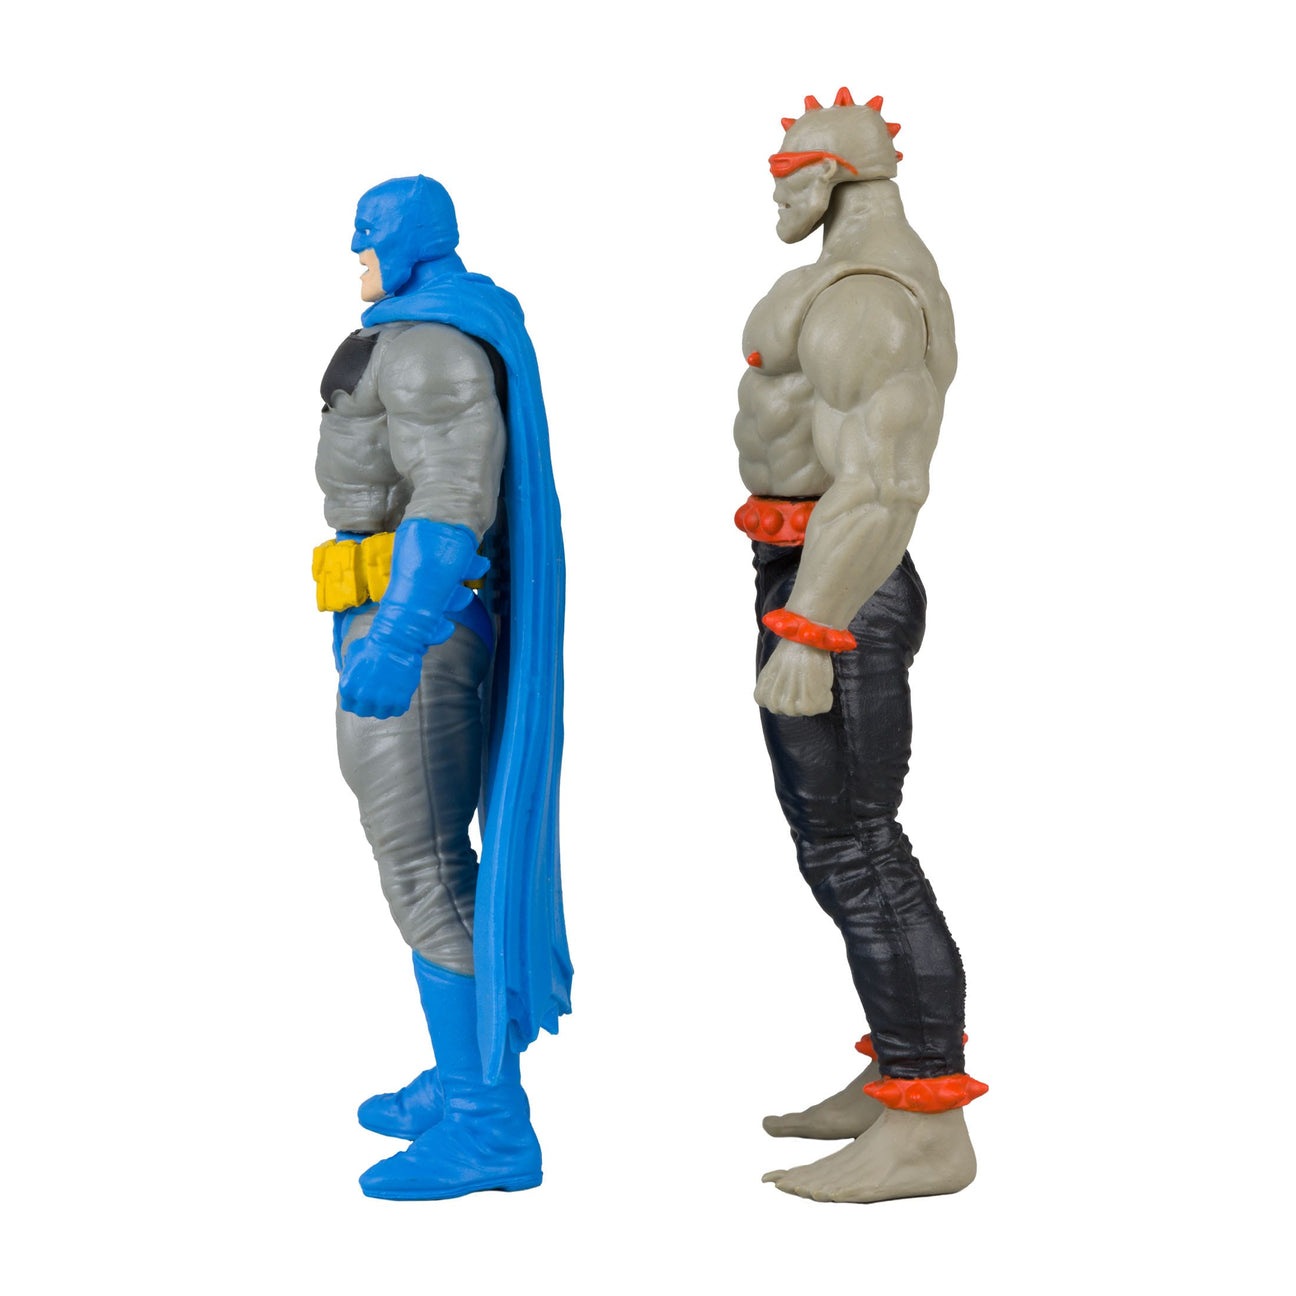 DC Page Punchers: Batman (Blue) & Mutant Leader (Dark Knight Returns #1) - Actionfigur & Comic - 8 cm-Actionfiguren-McFarlane Toys-Mighty Underground